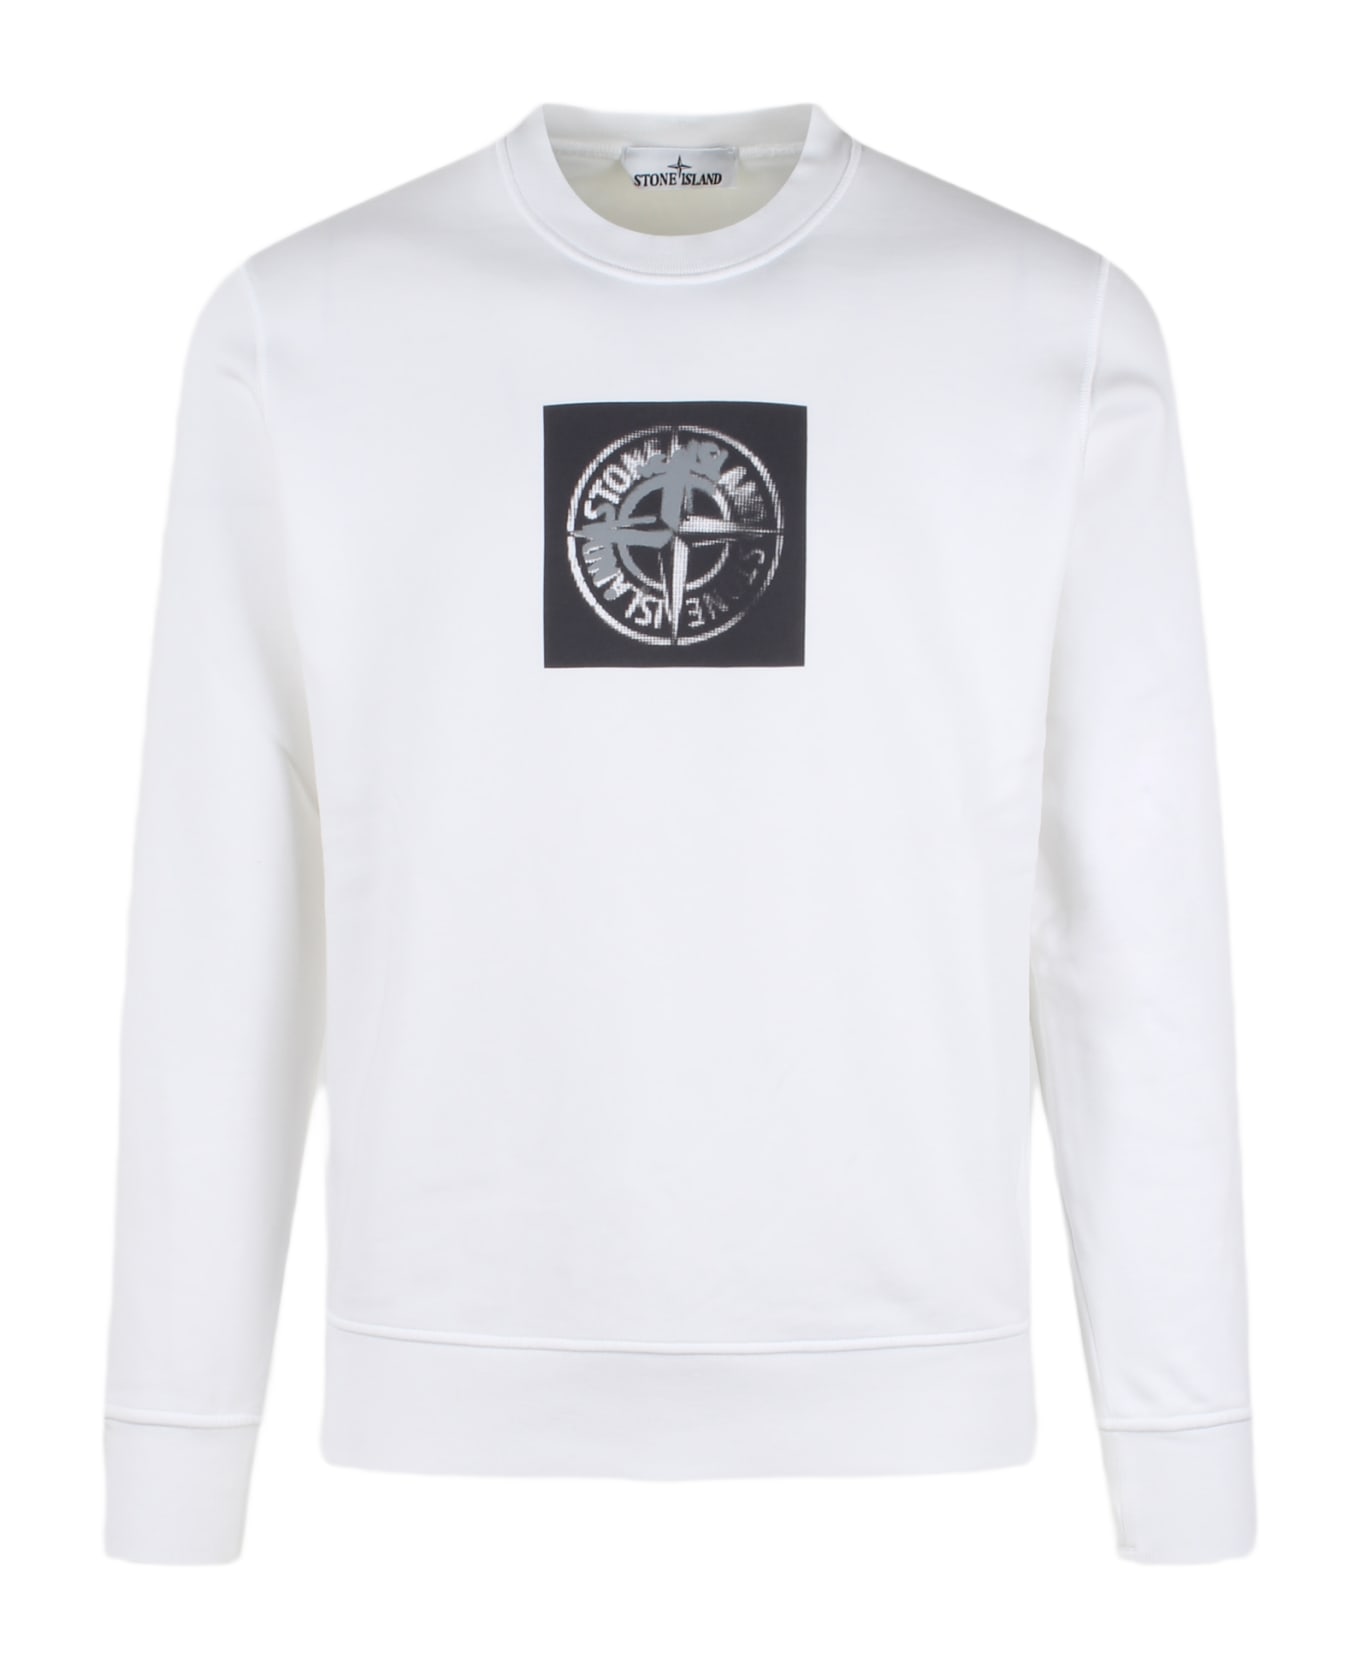 Stone Island Industrial One Print Sweatshirt - White